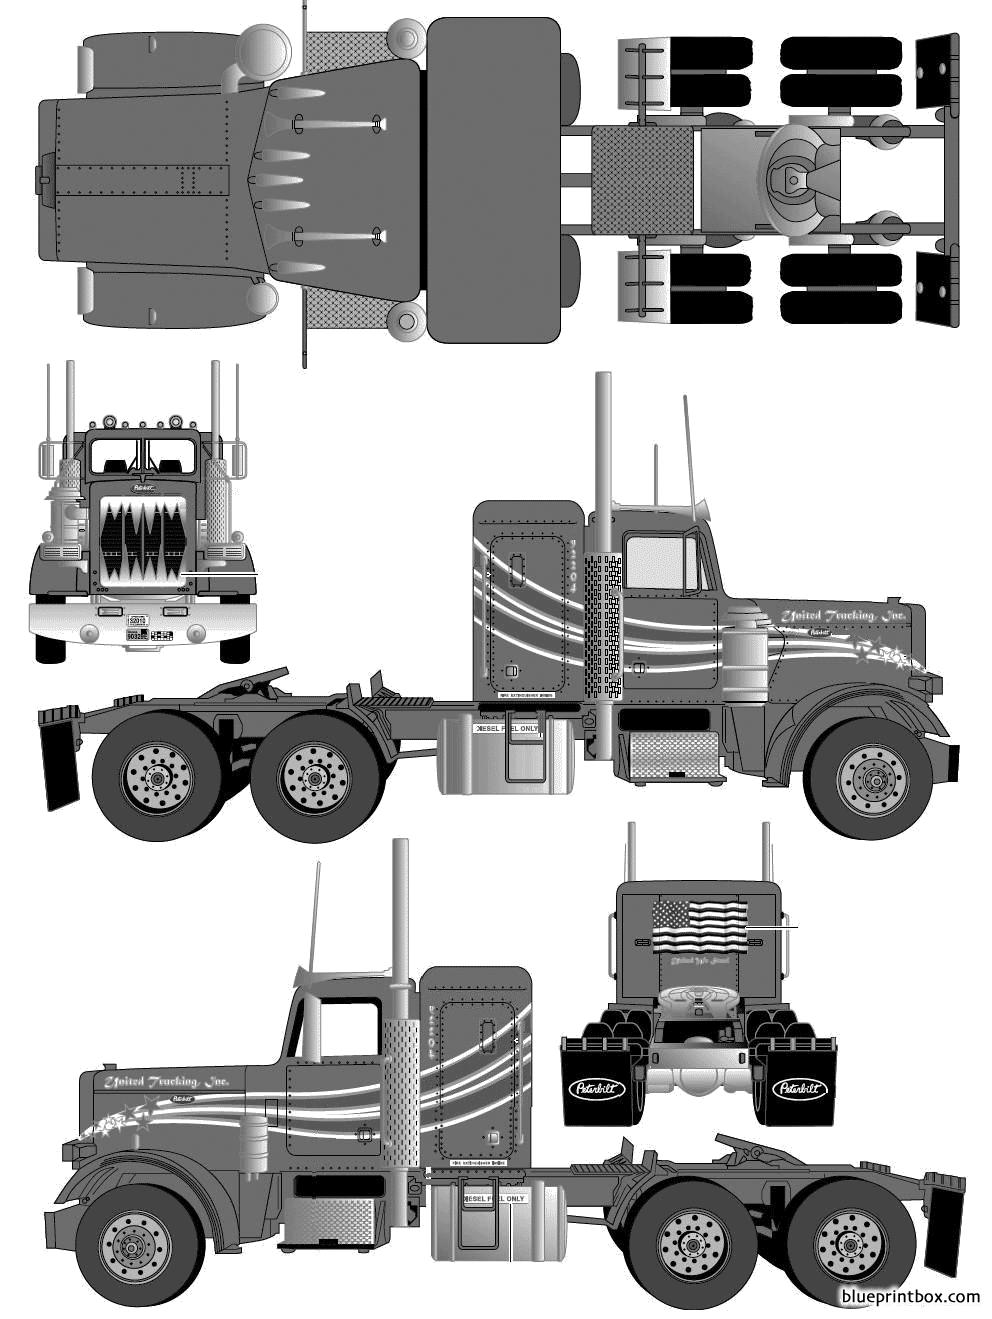 peterbilt 359 tractor 2 - BlueprintBox.com - Free Plans and Blueprints